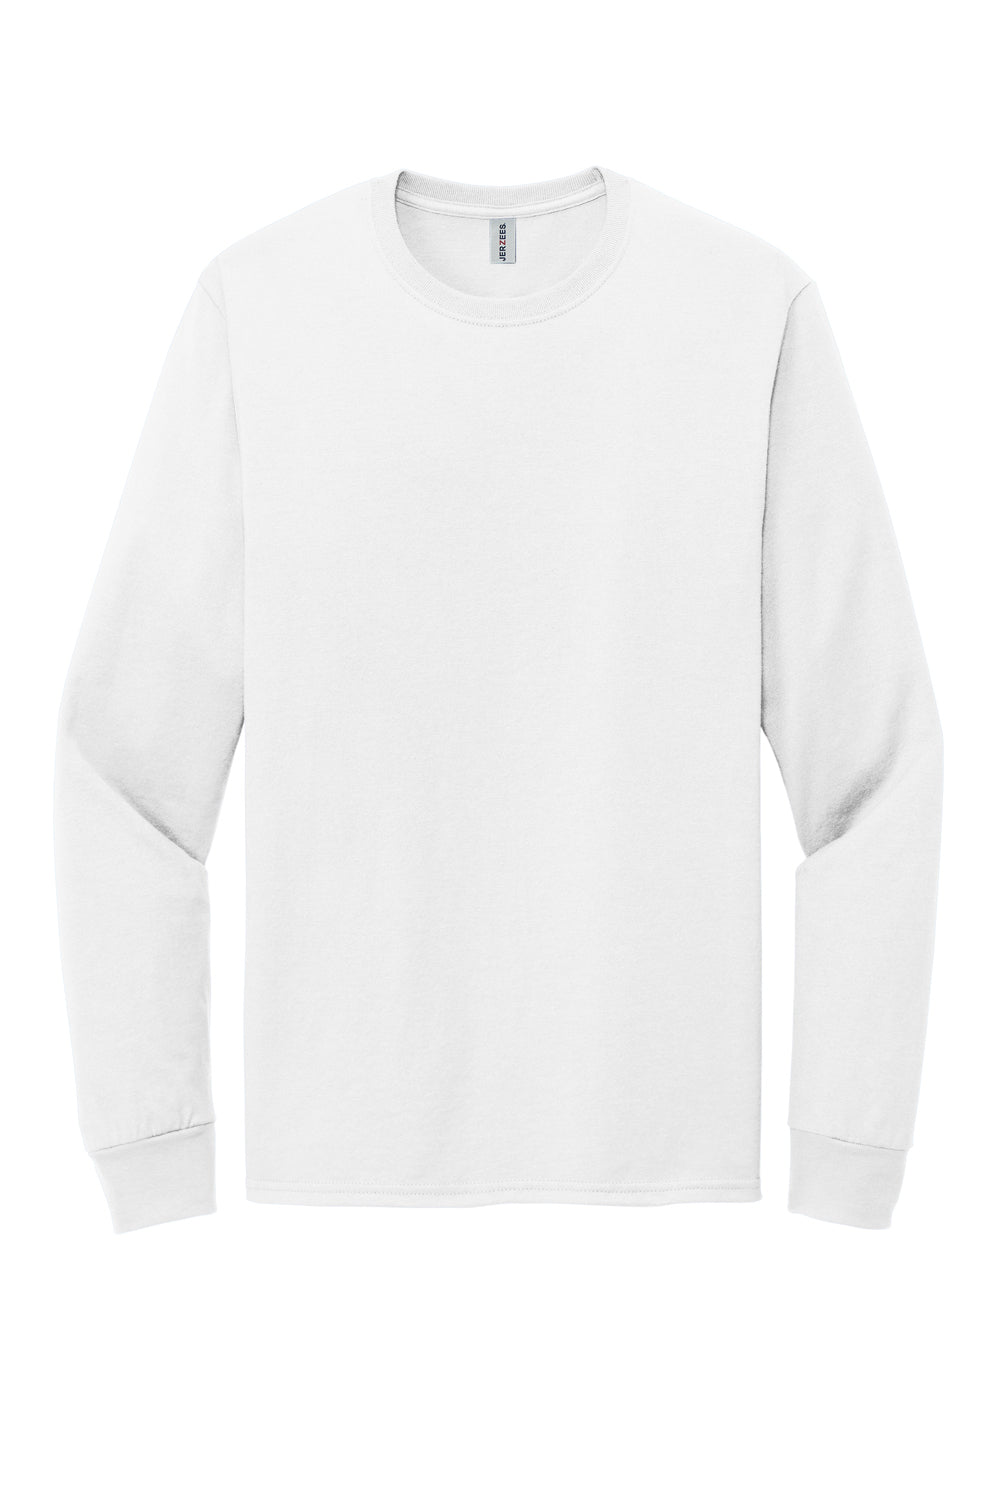 Jerzees 560LS Mens Premium Blend Ring Spun Long Sleeve Crewneck T-Shirt White Flat Front